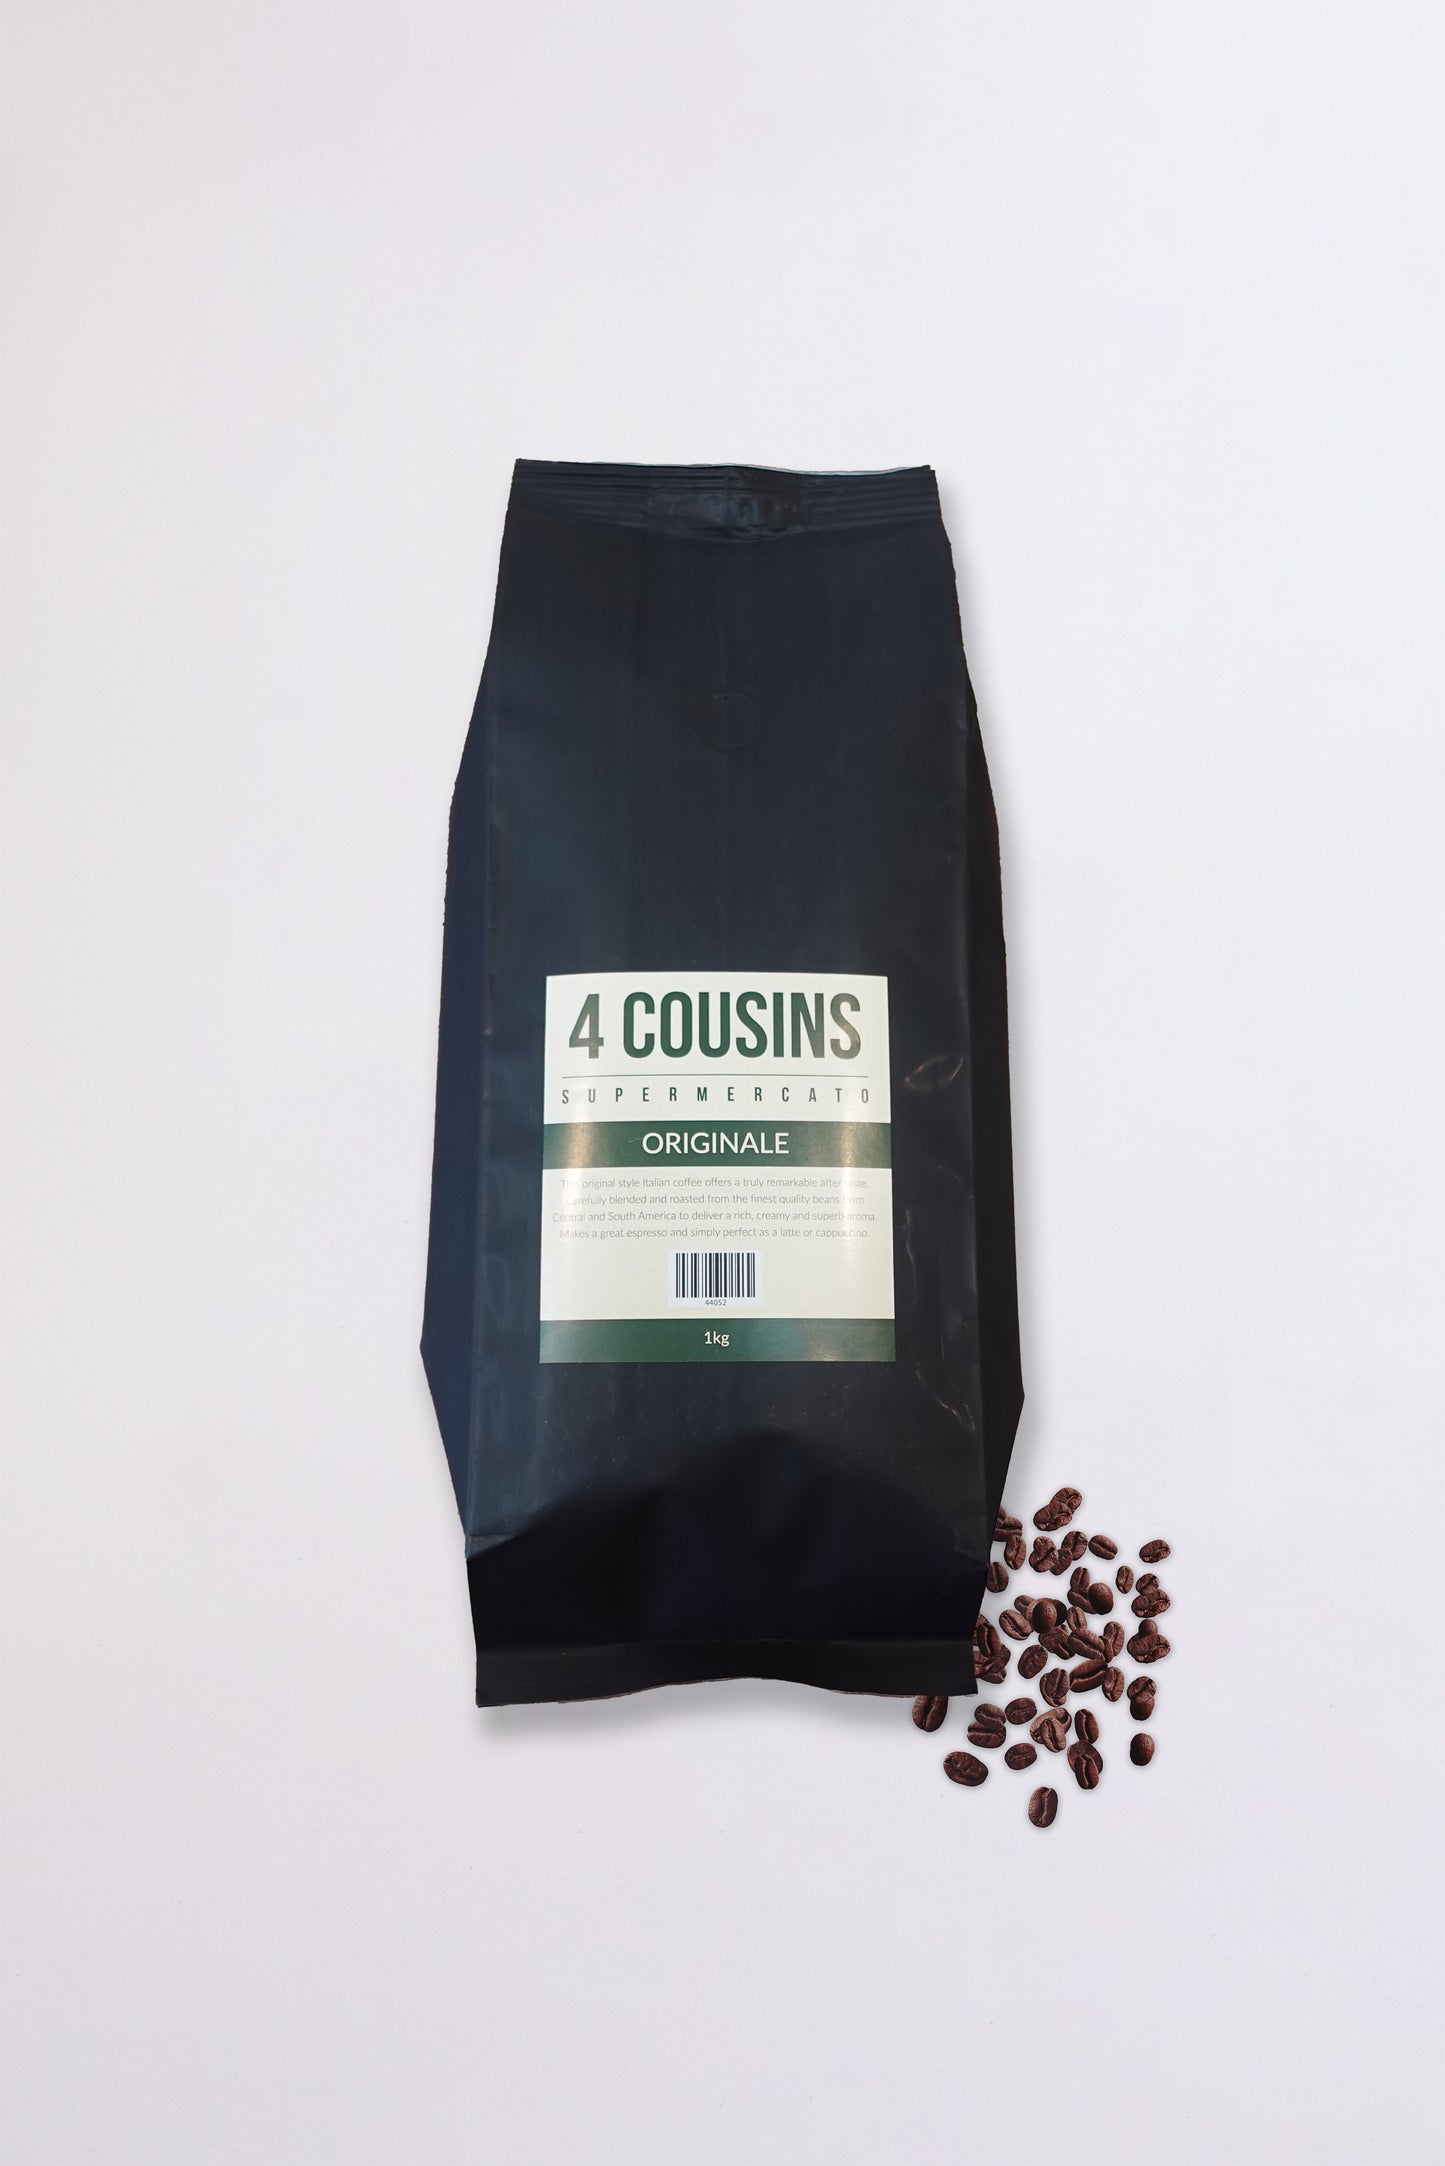 4 Cousins Originale Coffee